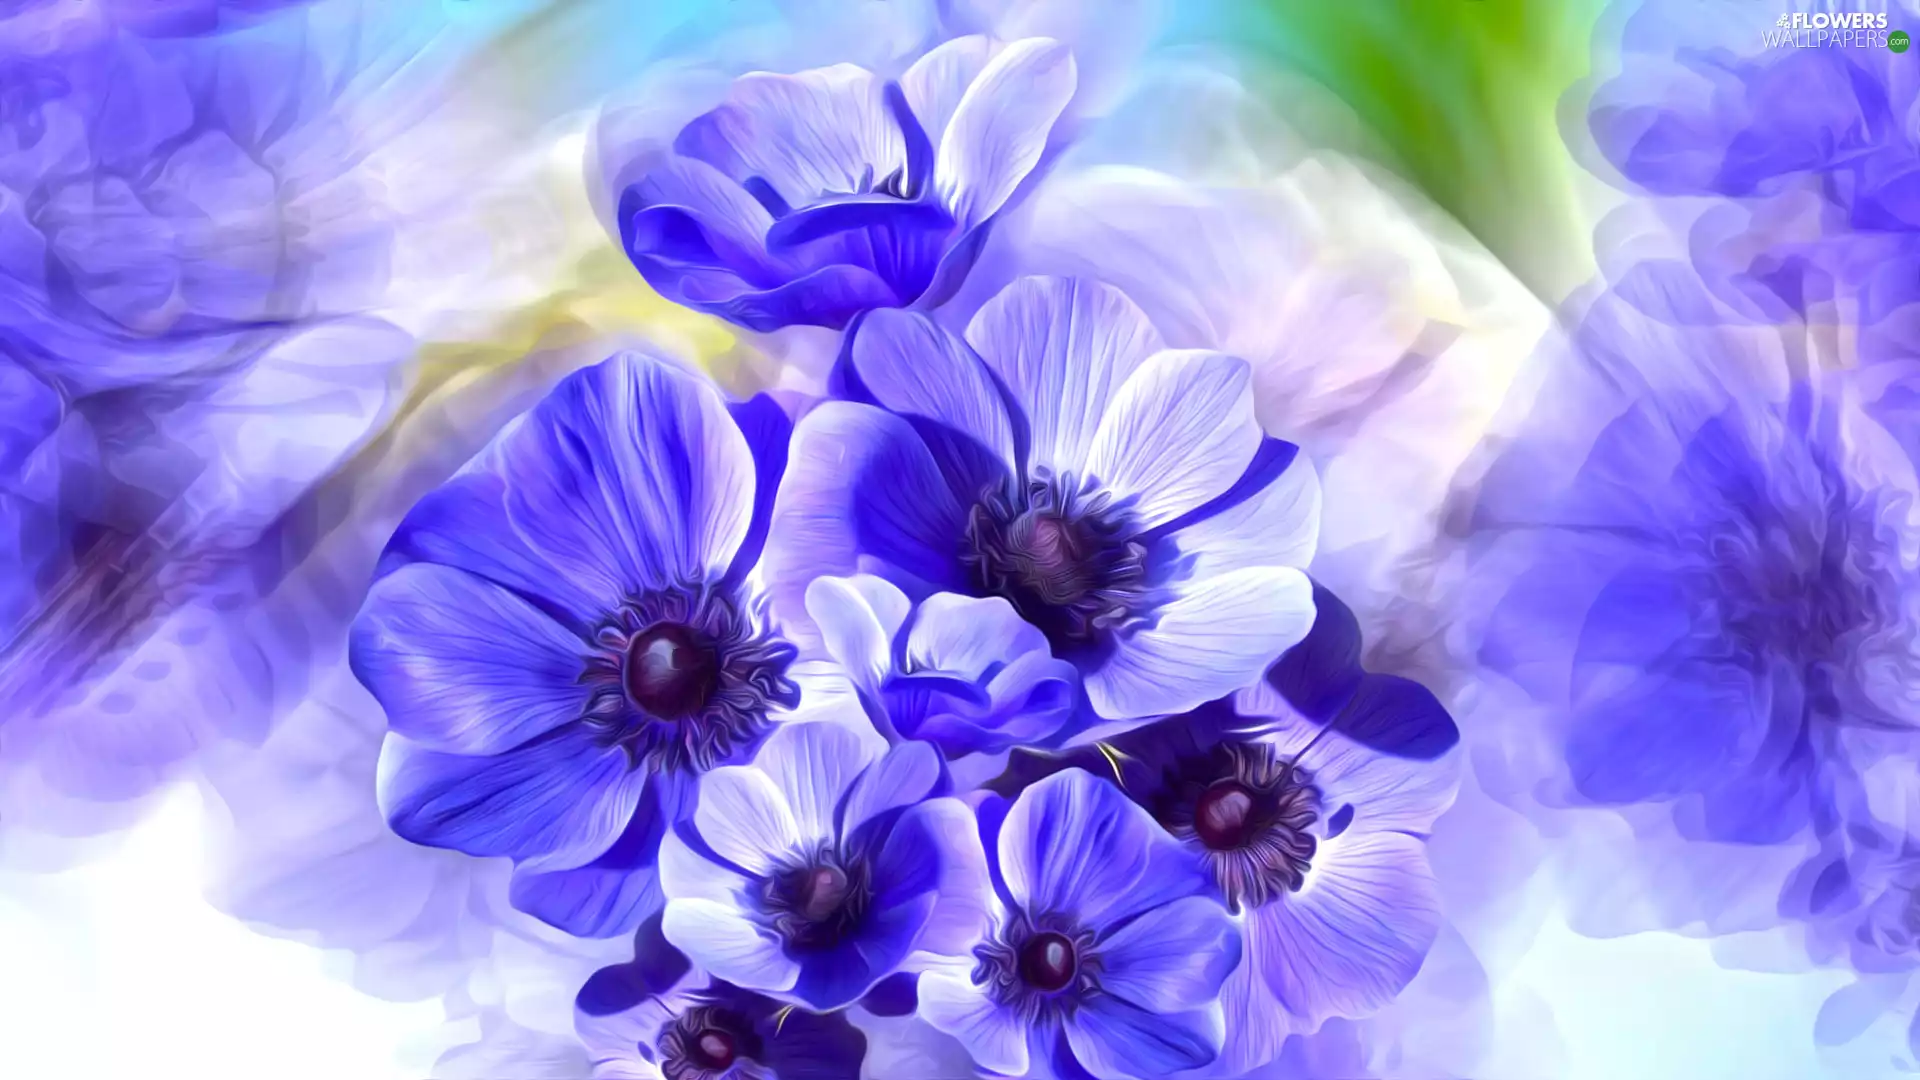 Flowers, Anemones, graphics, Blue